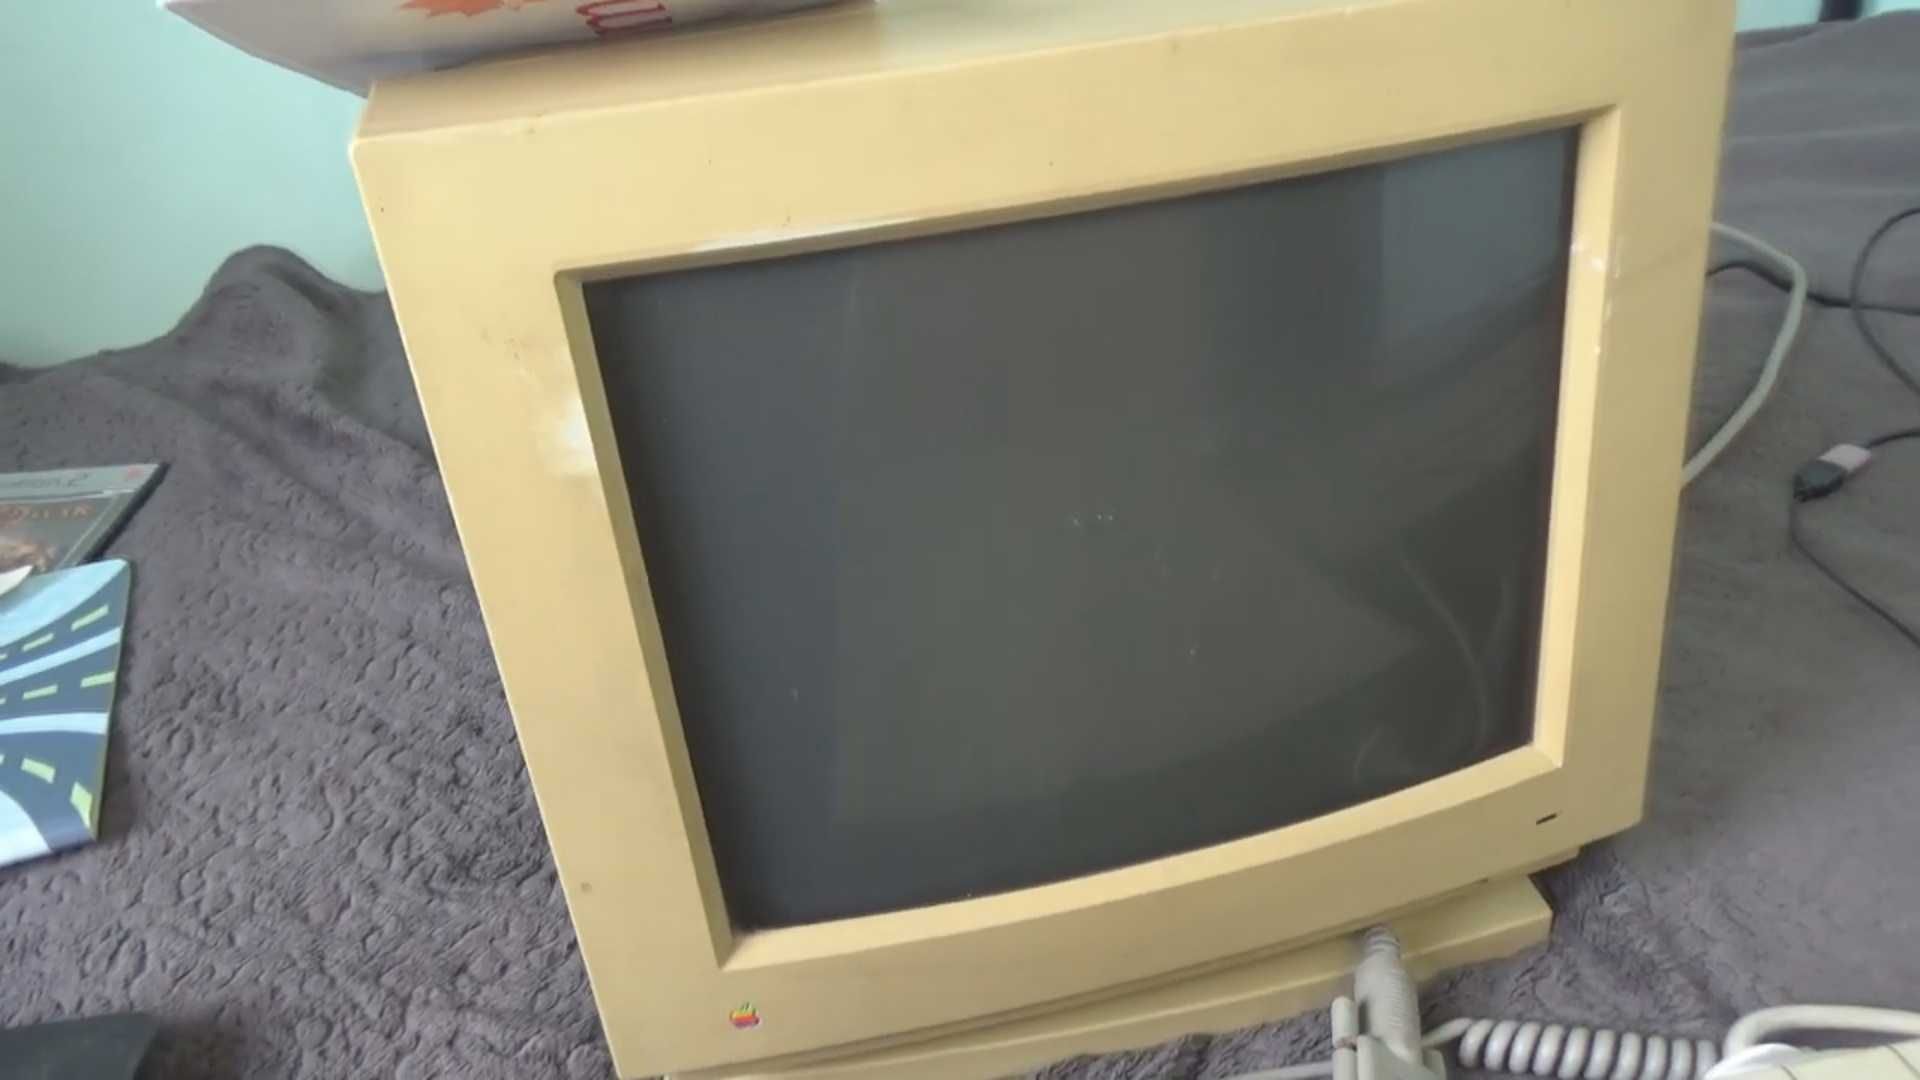 Apple Macintosh Color Display M1212 цветен CRT монитор